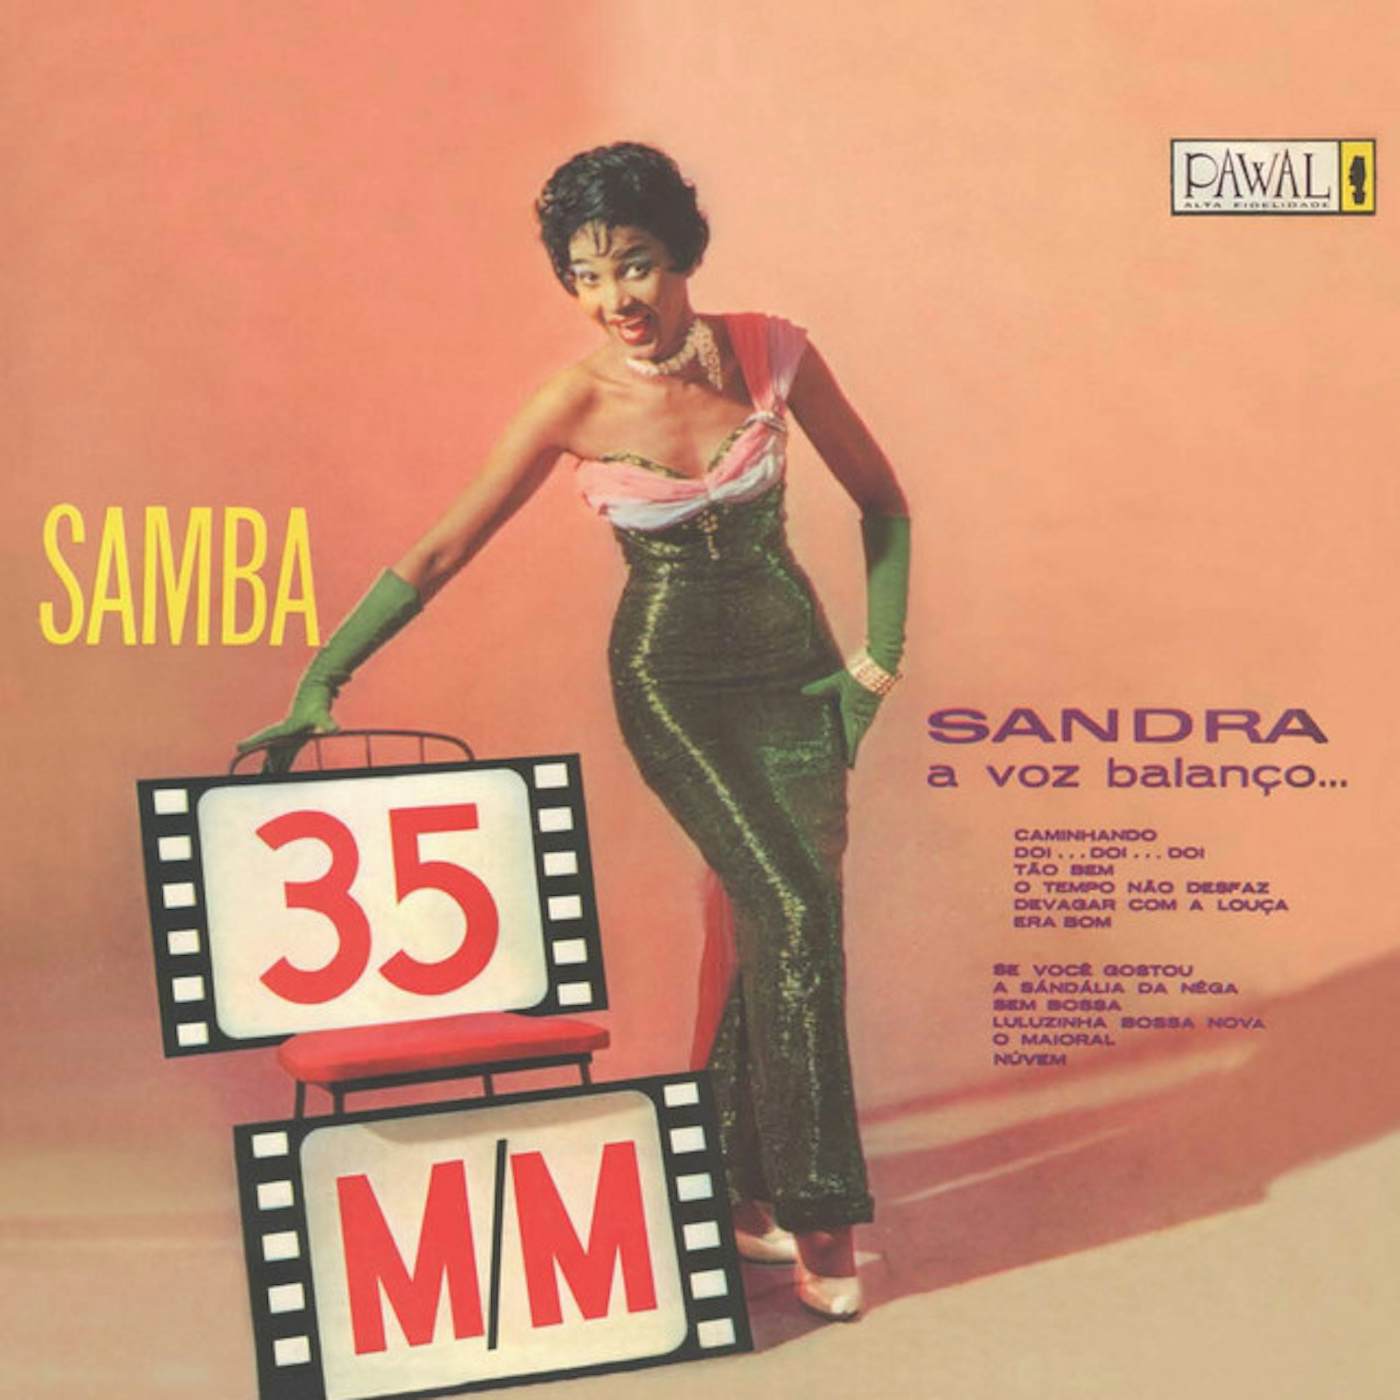 Sandra SAMBA 35MM CD